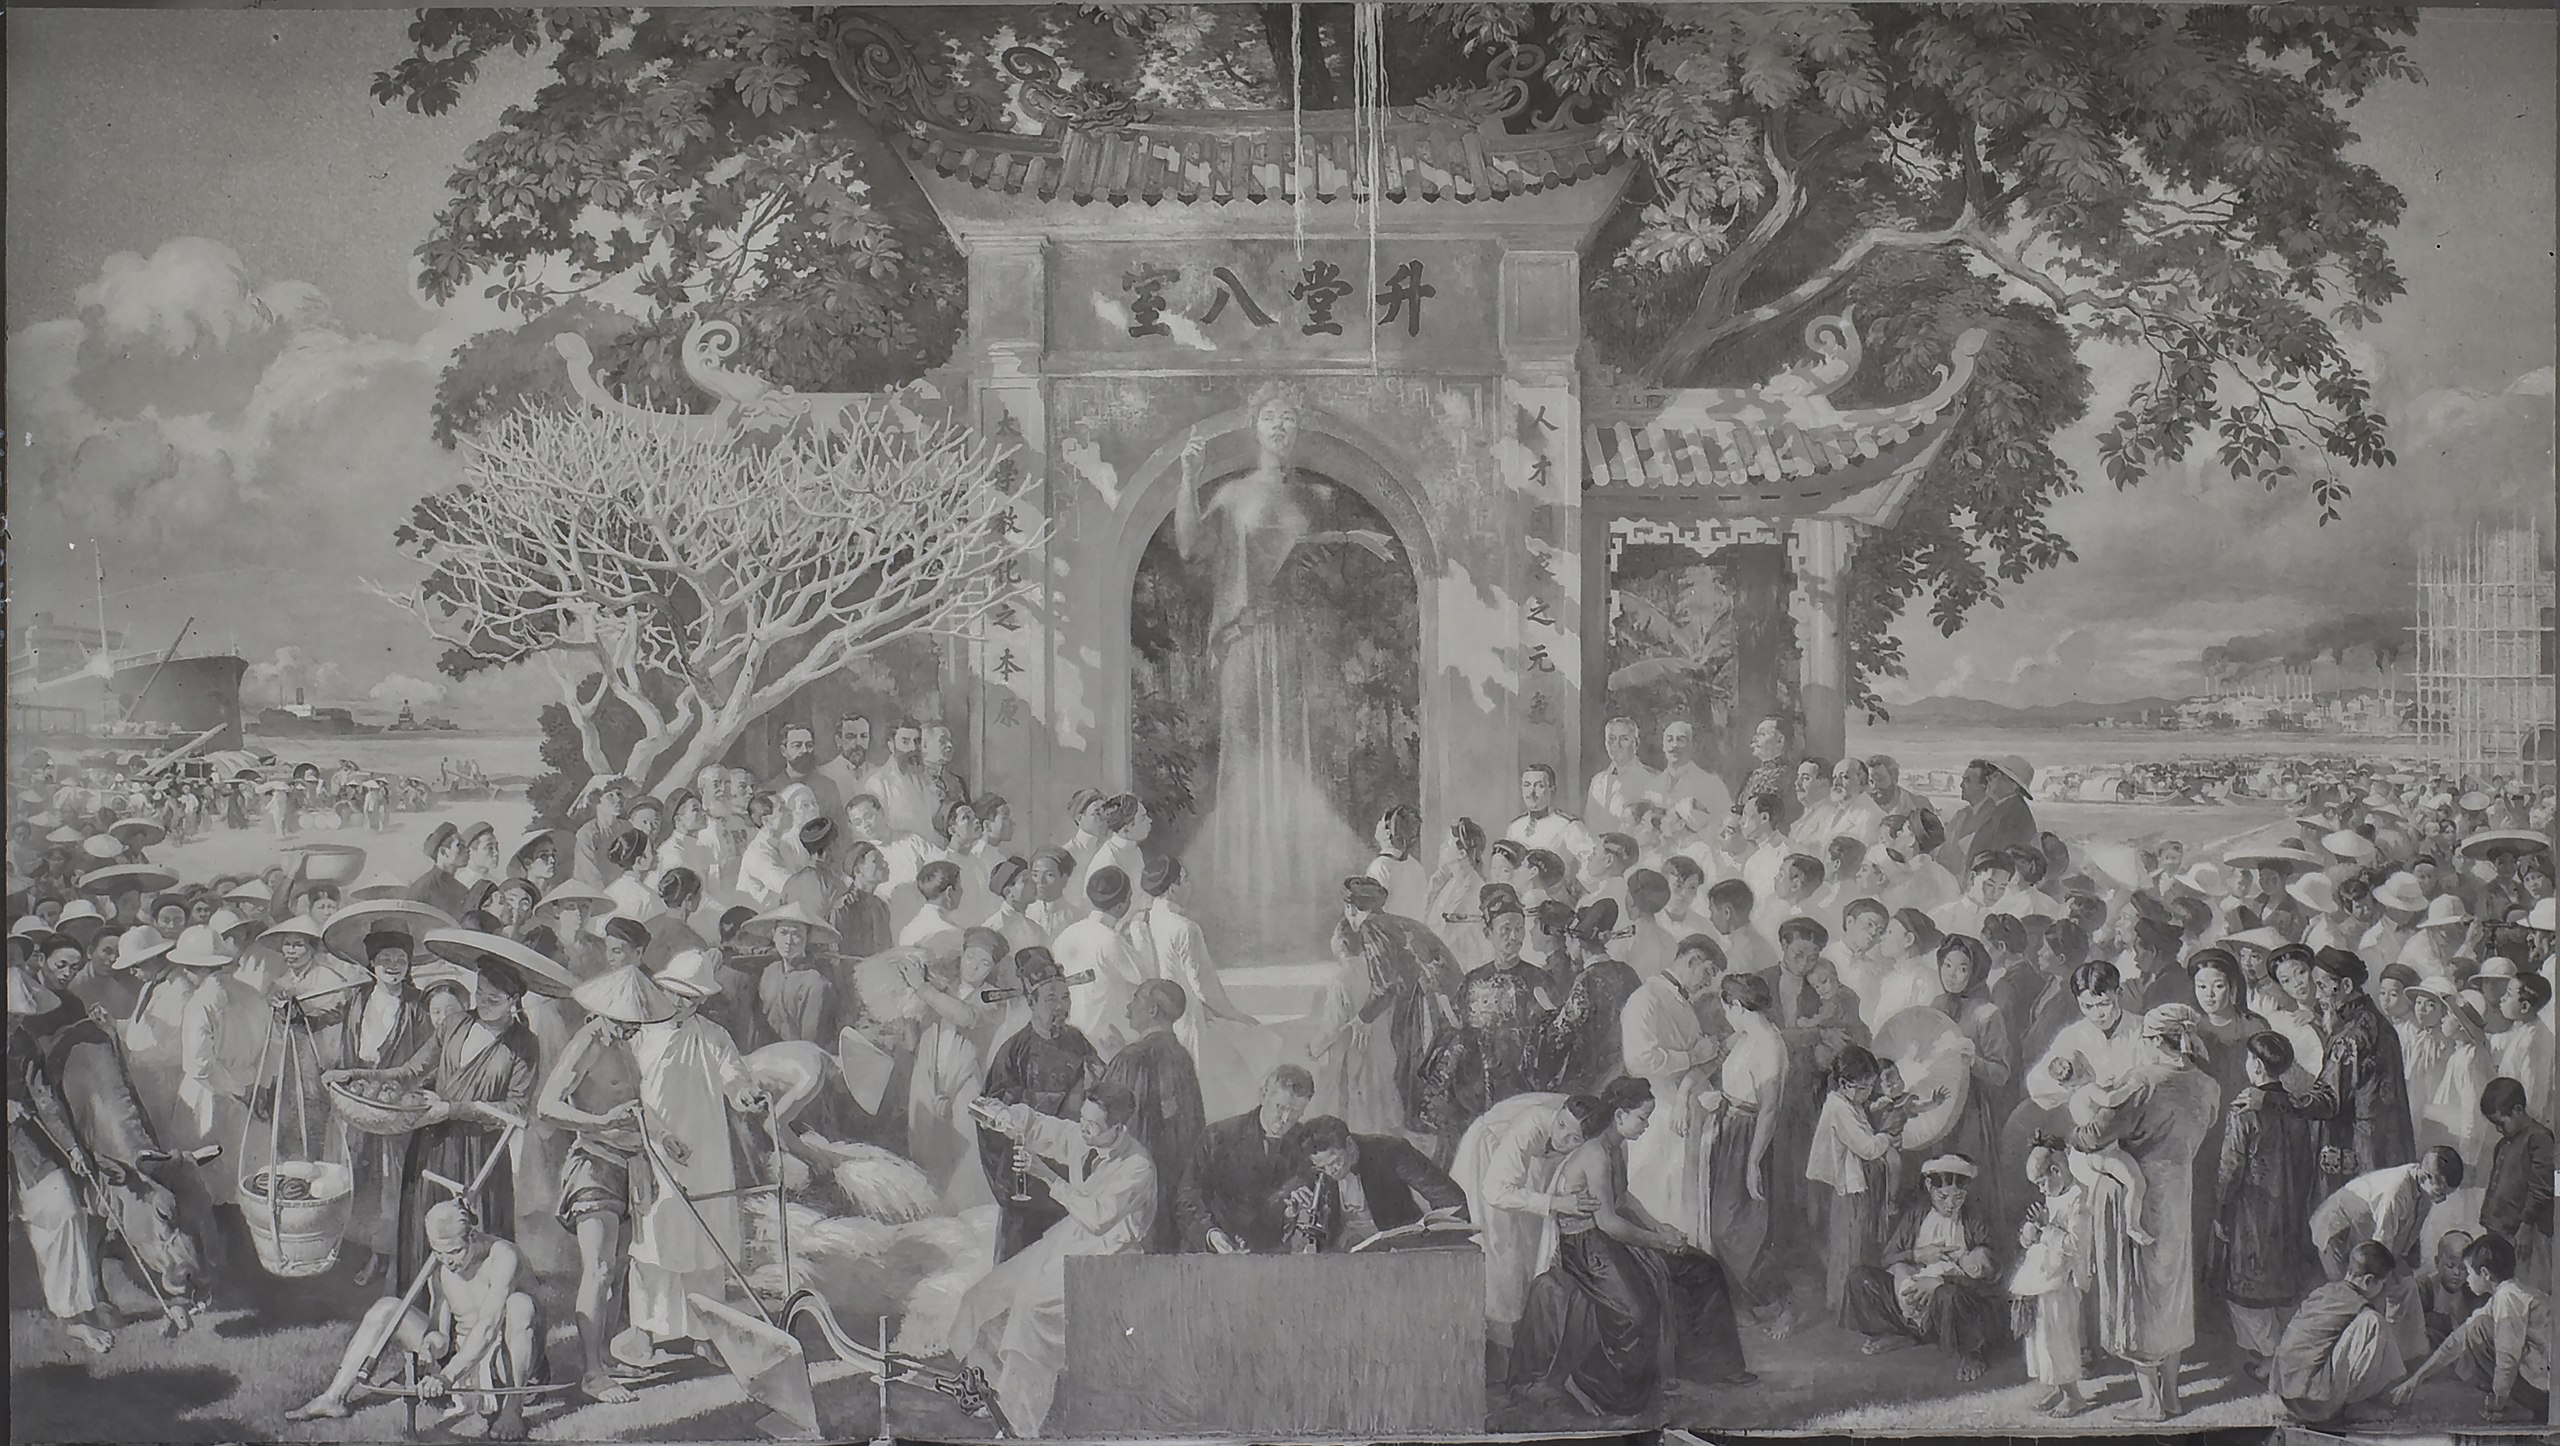 Tập tin:HANOI 1920-1929 - Université indochinoise - Peinture décorative du grand amphithéâtre.jpg - Wikipedia tiếng Việt